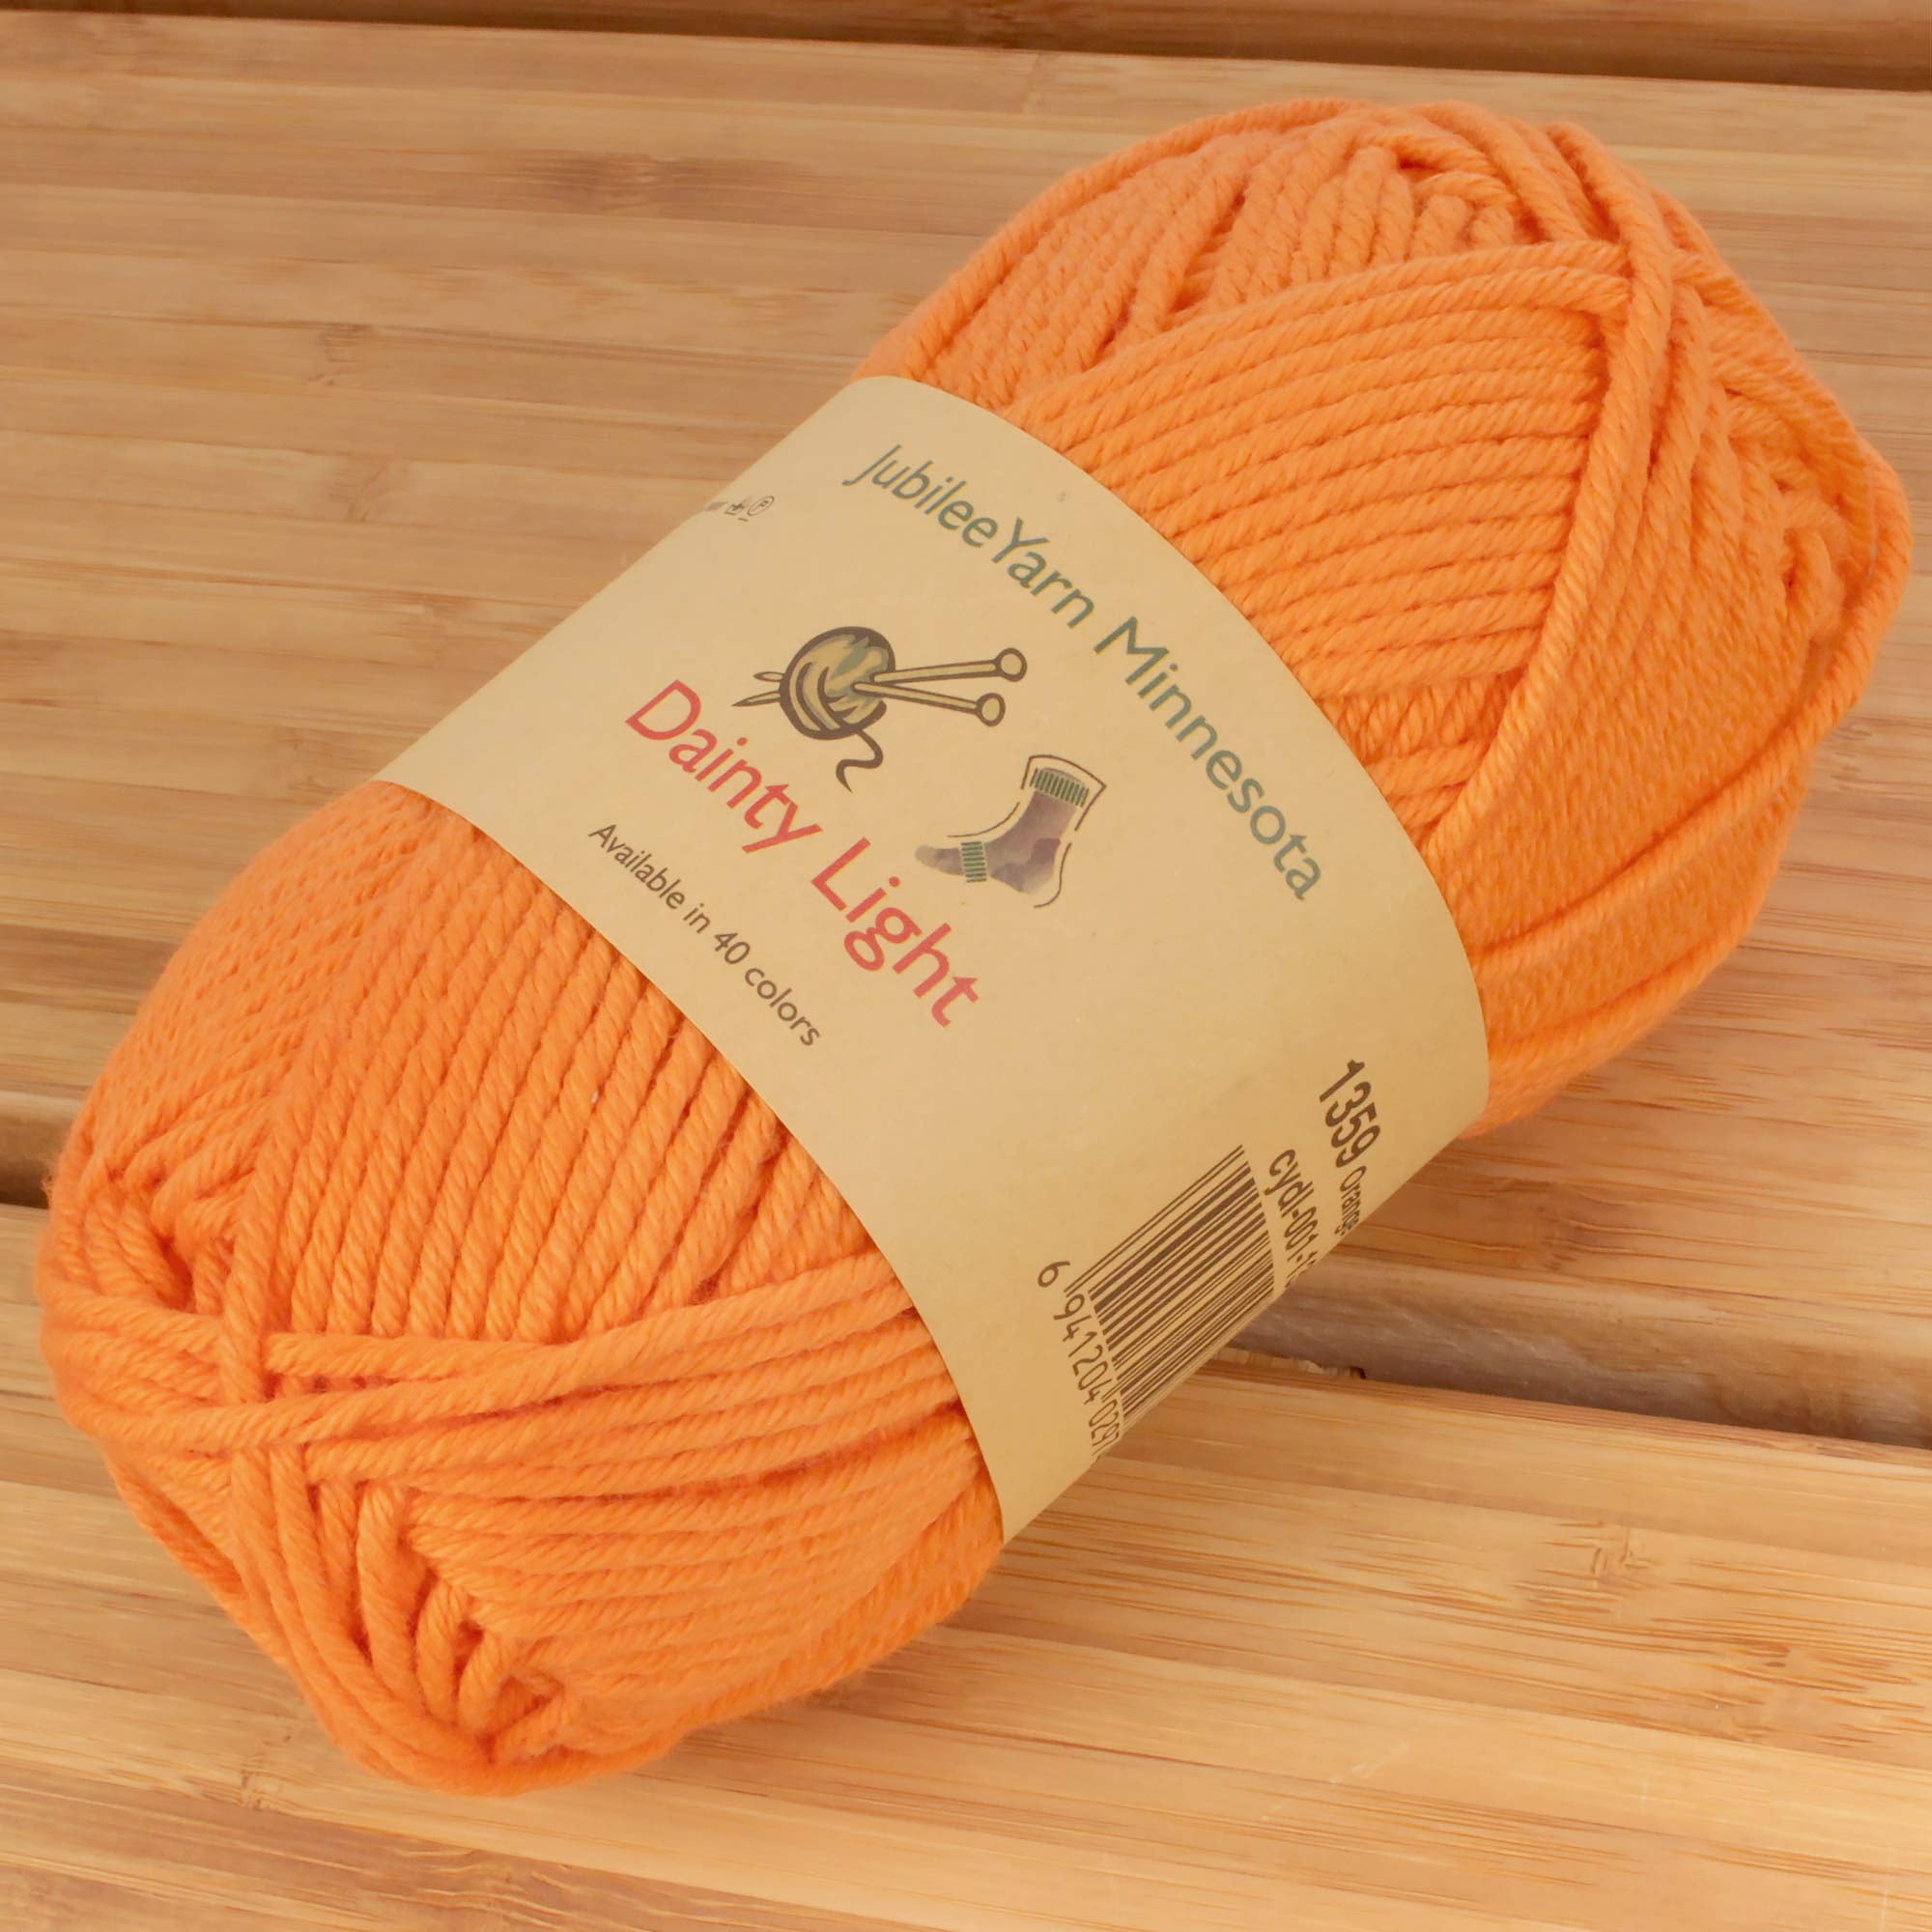 JubileeYarn Medium Gauge Worsted Weight Yarn - Dainty Light - 4 Skeins -  100% Cotton - Sand - Color 1225 